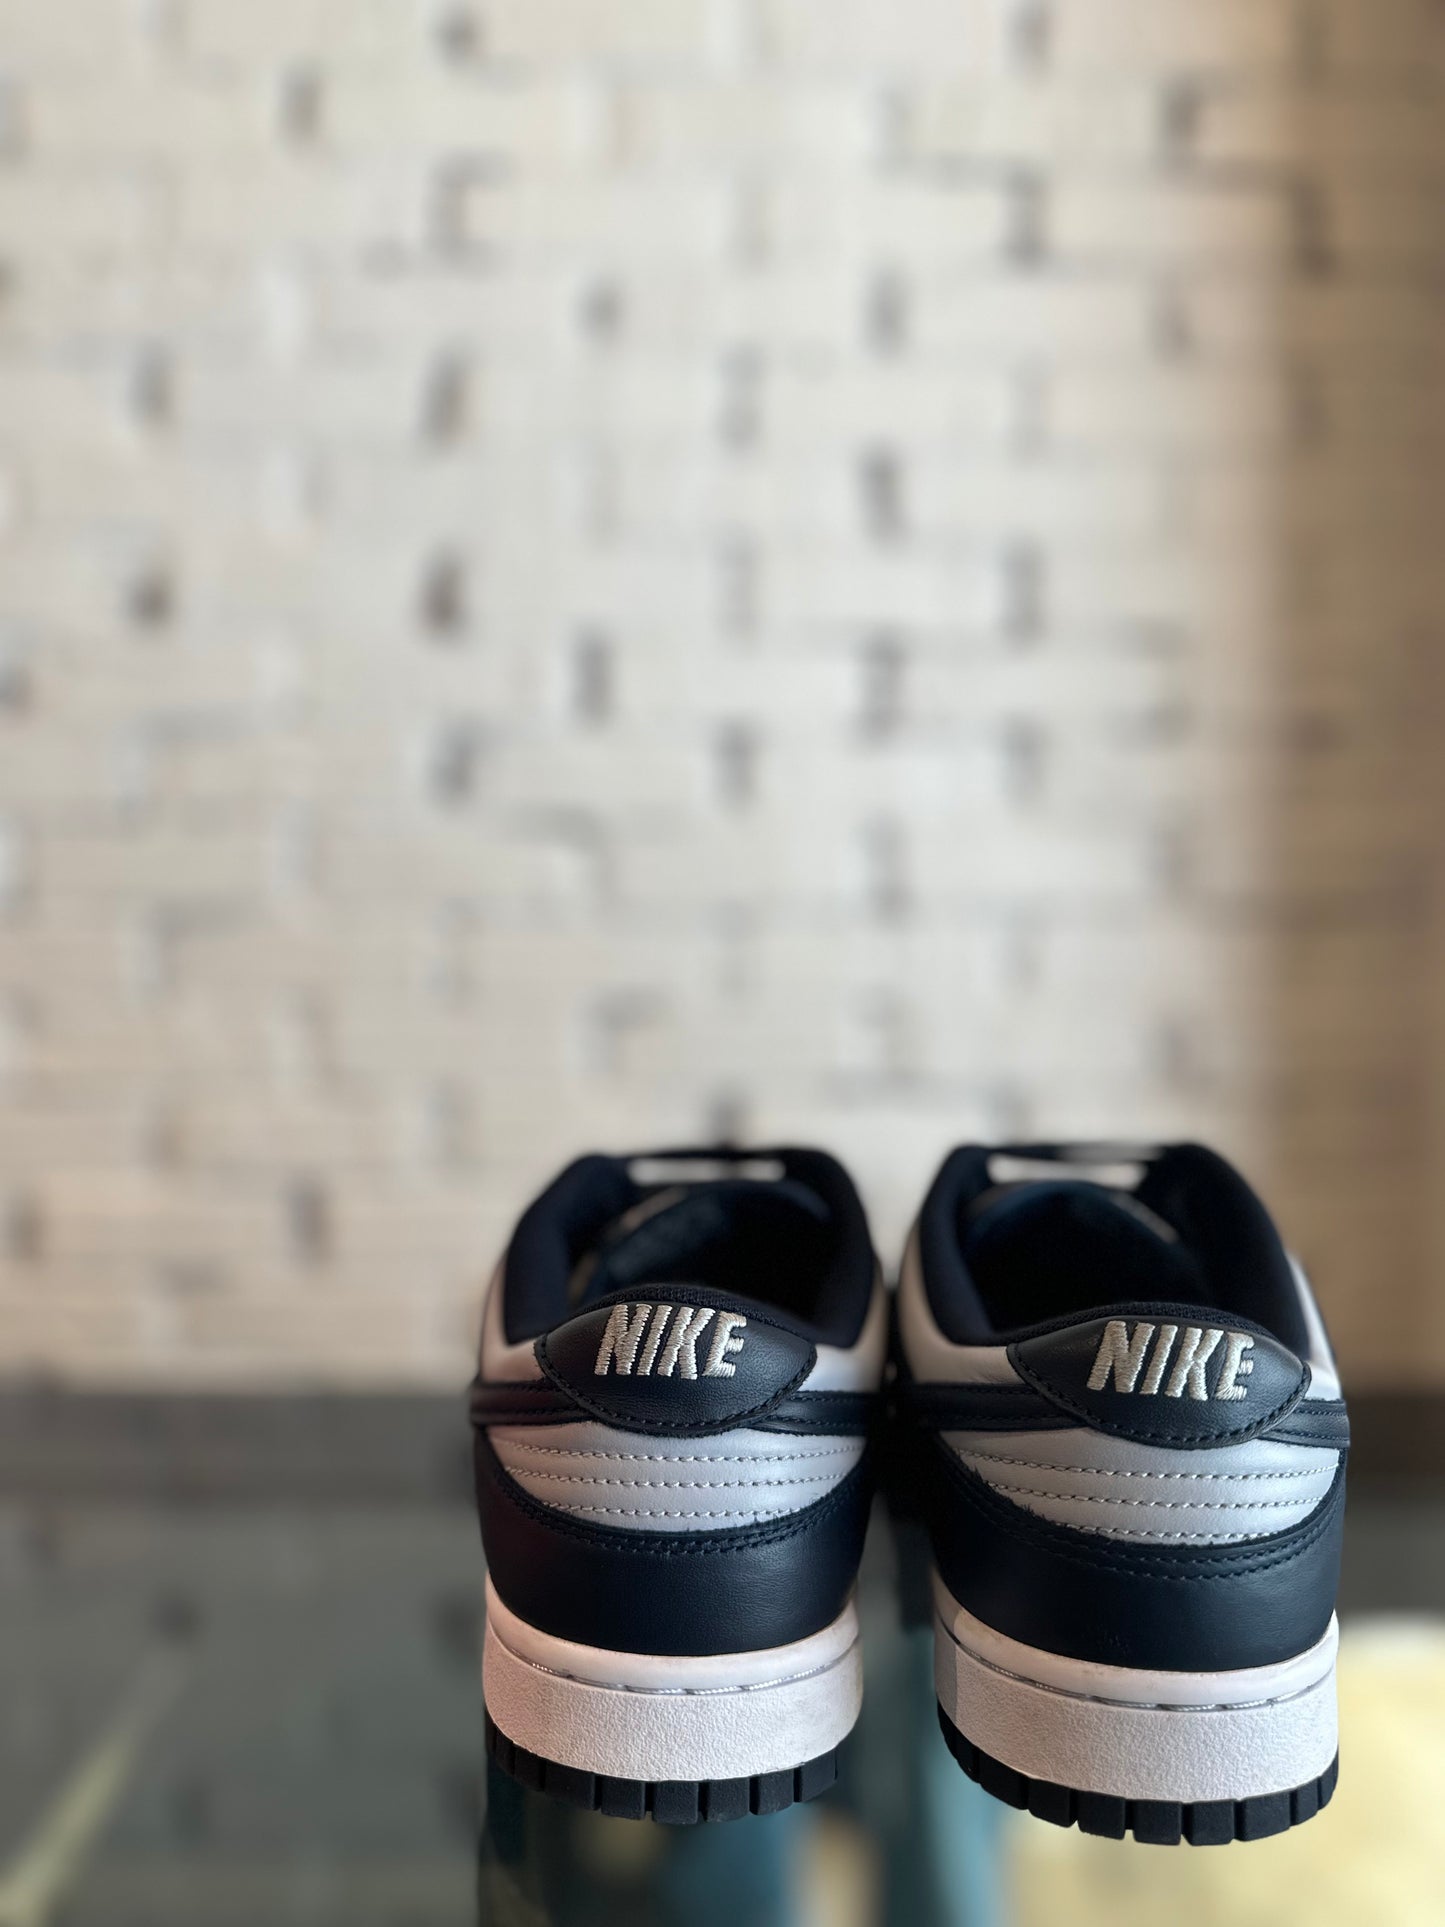 Nike Dunk Low “Georgetown” Size 9.5 PO OG